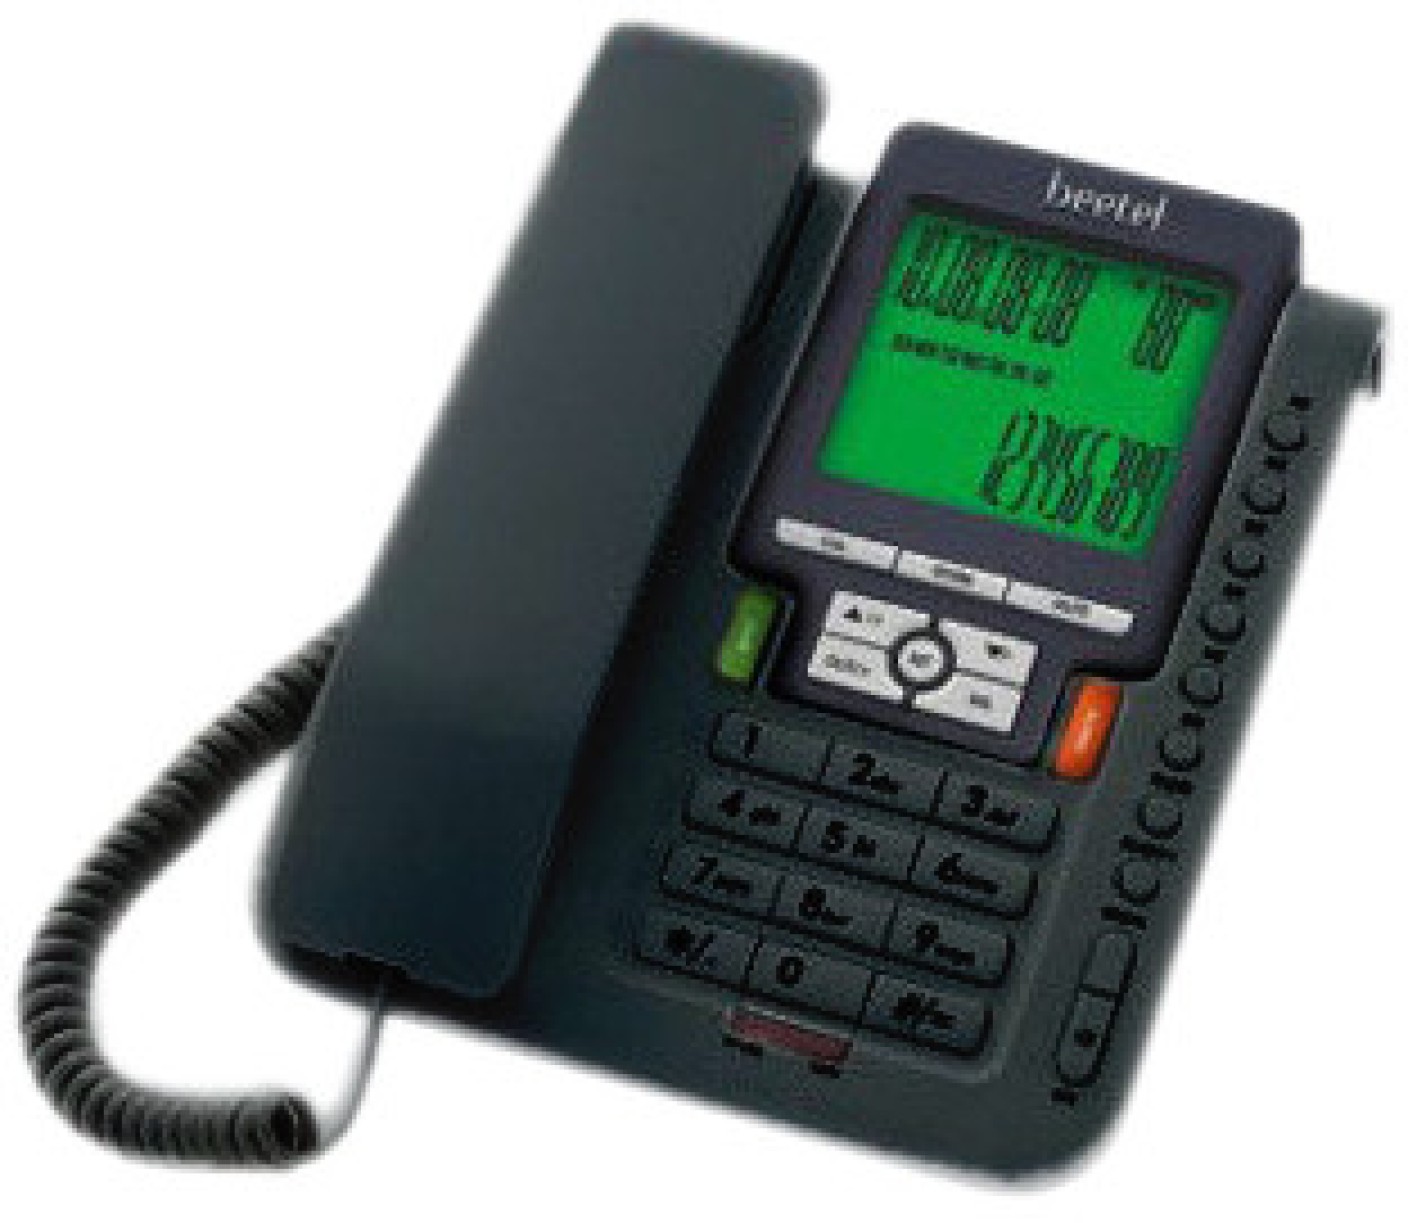 Beetel M59 Corded Landline Phone User Manual